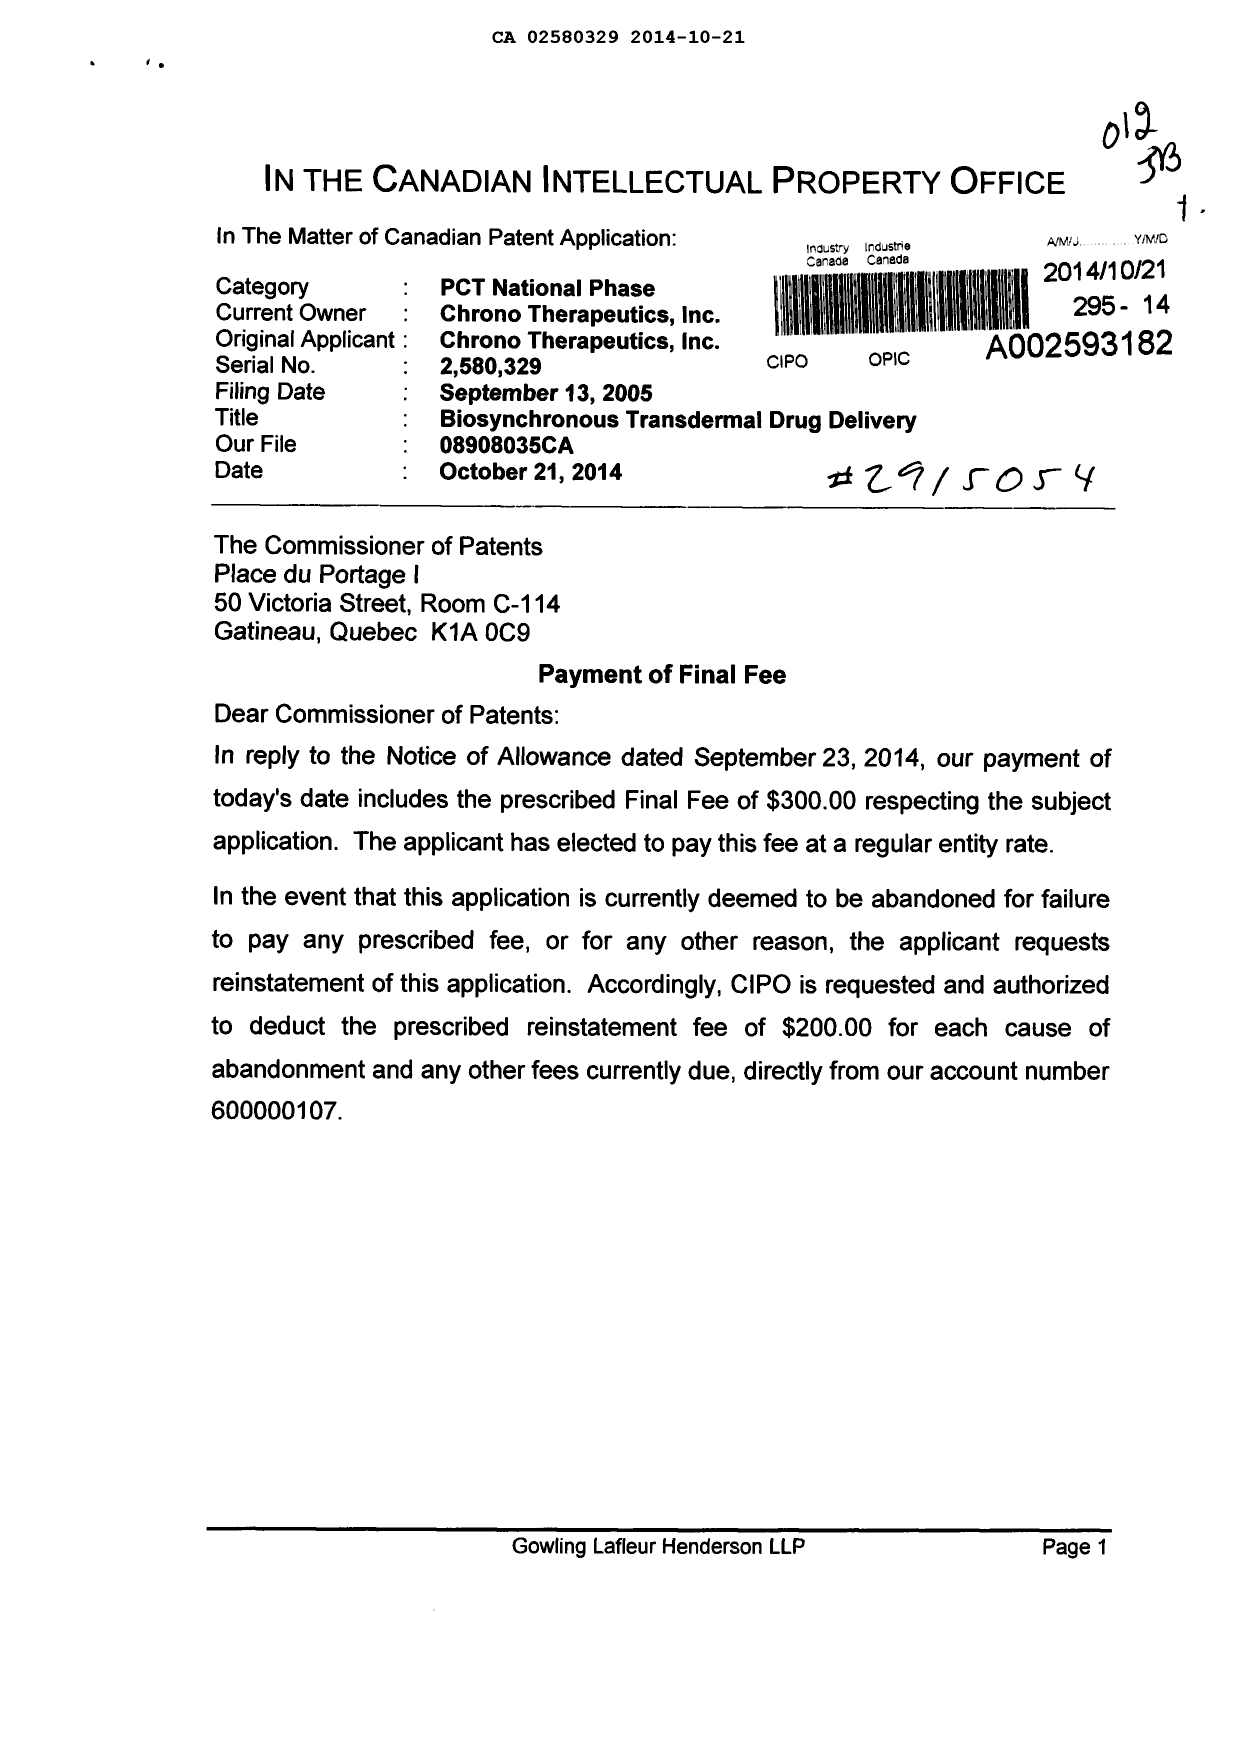 Canadian Patent Document 2580329. Correspondence 20141021. Image 1 of 2